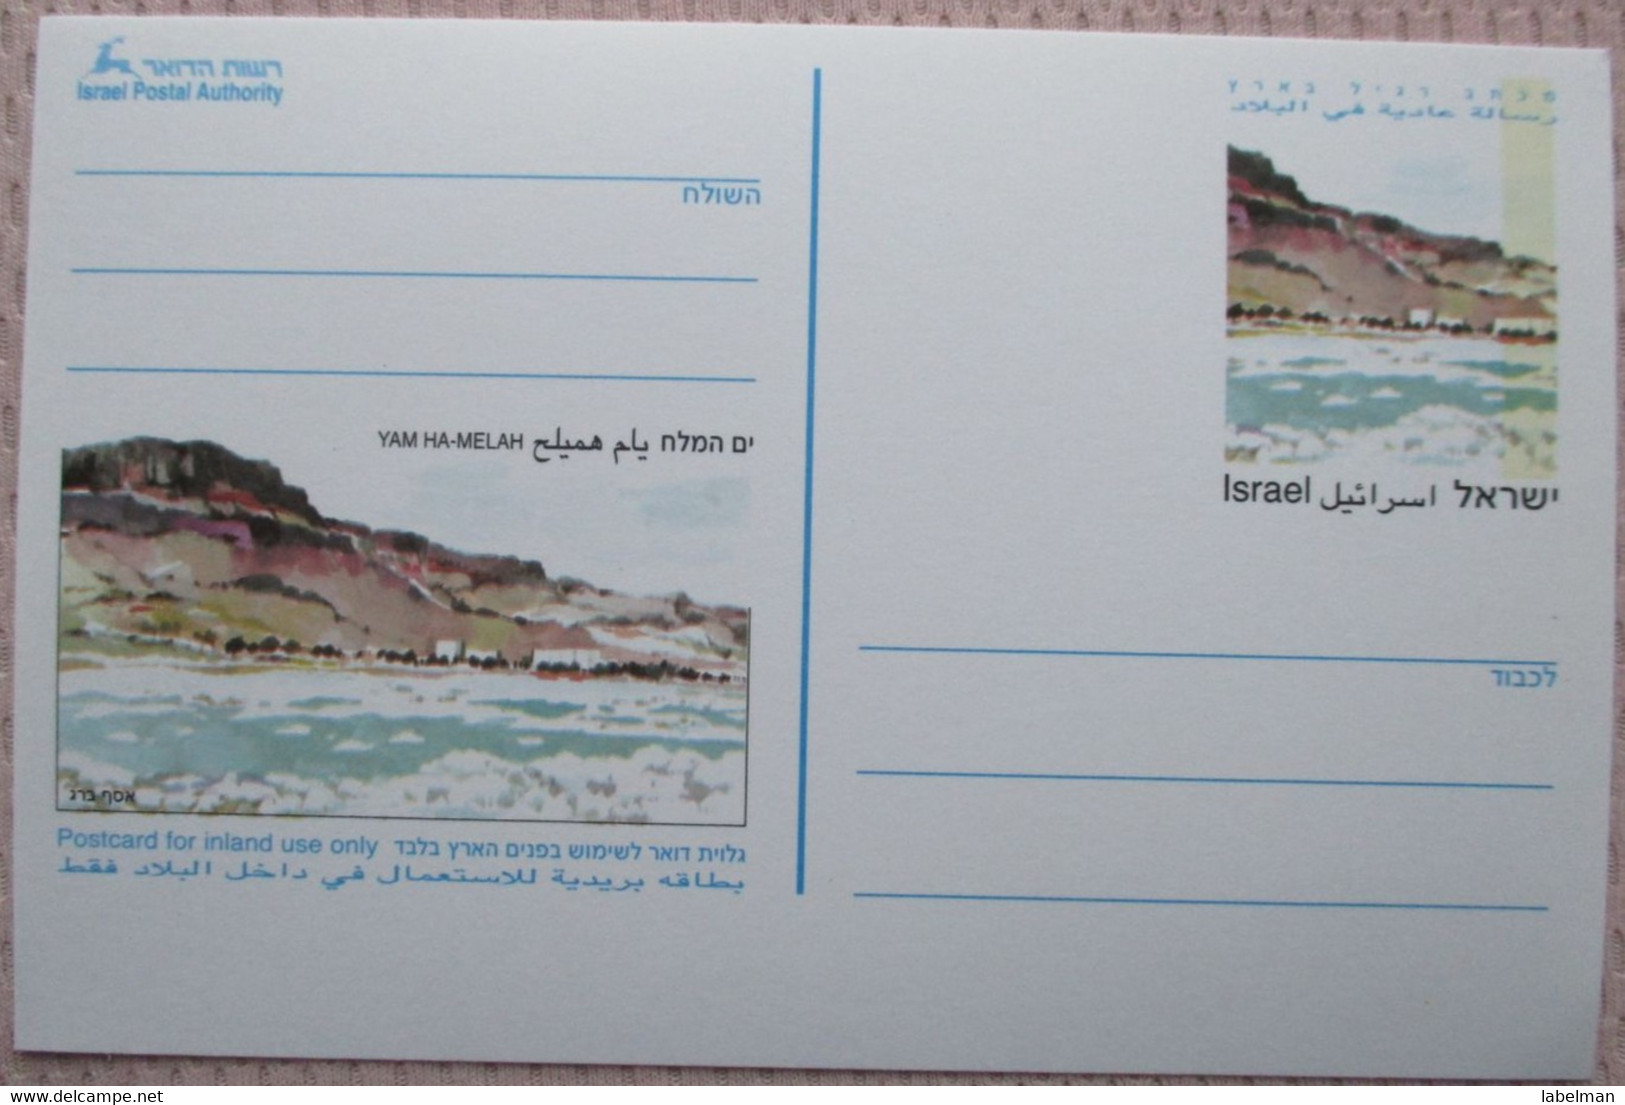 ISRAEL POSTAL AUTHORITY DEAD SEA DESERT INLAND PREPAID POSTCARD POSTKARTE CARD ANSICHTSKARTE CARTOLINA CARTE POSTALE PC - Cartoline Maximum